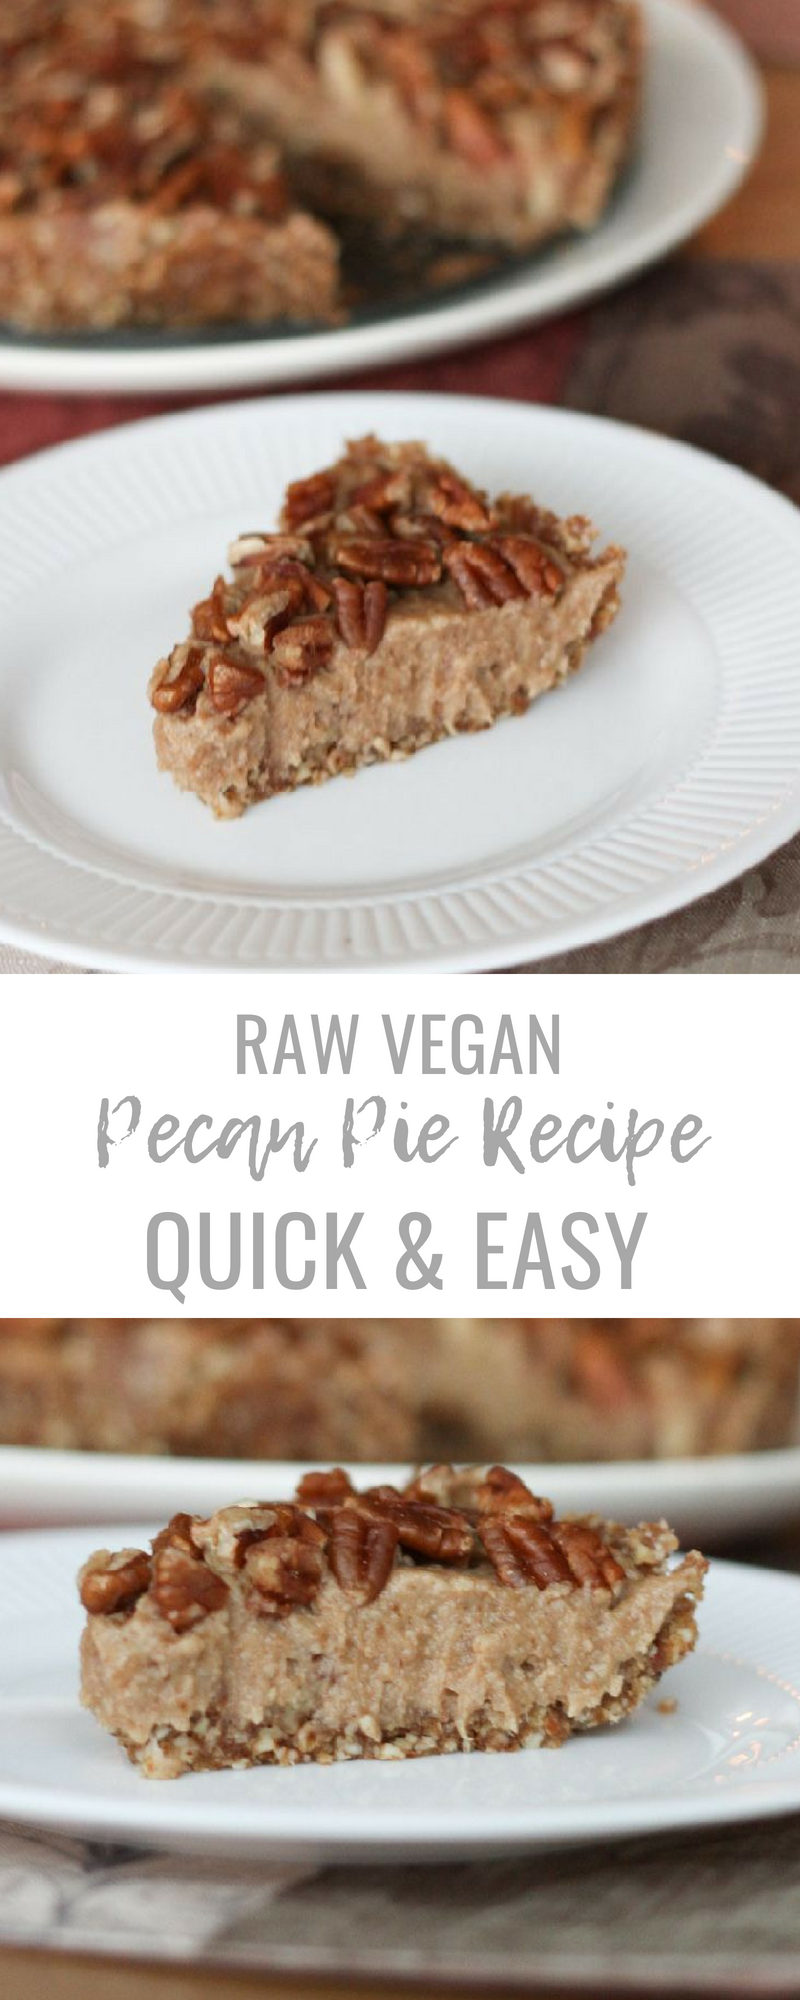 Raw Vegan Pecan Pie | www.livesimplynatural.com